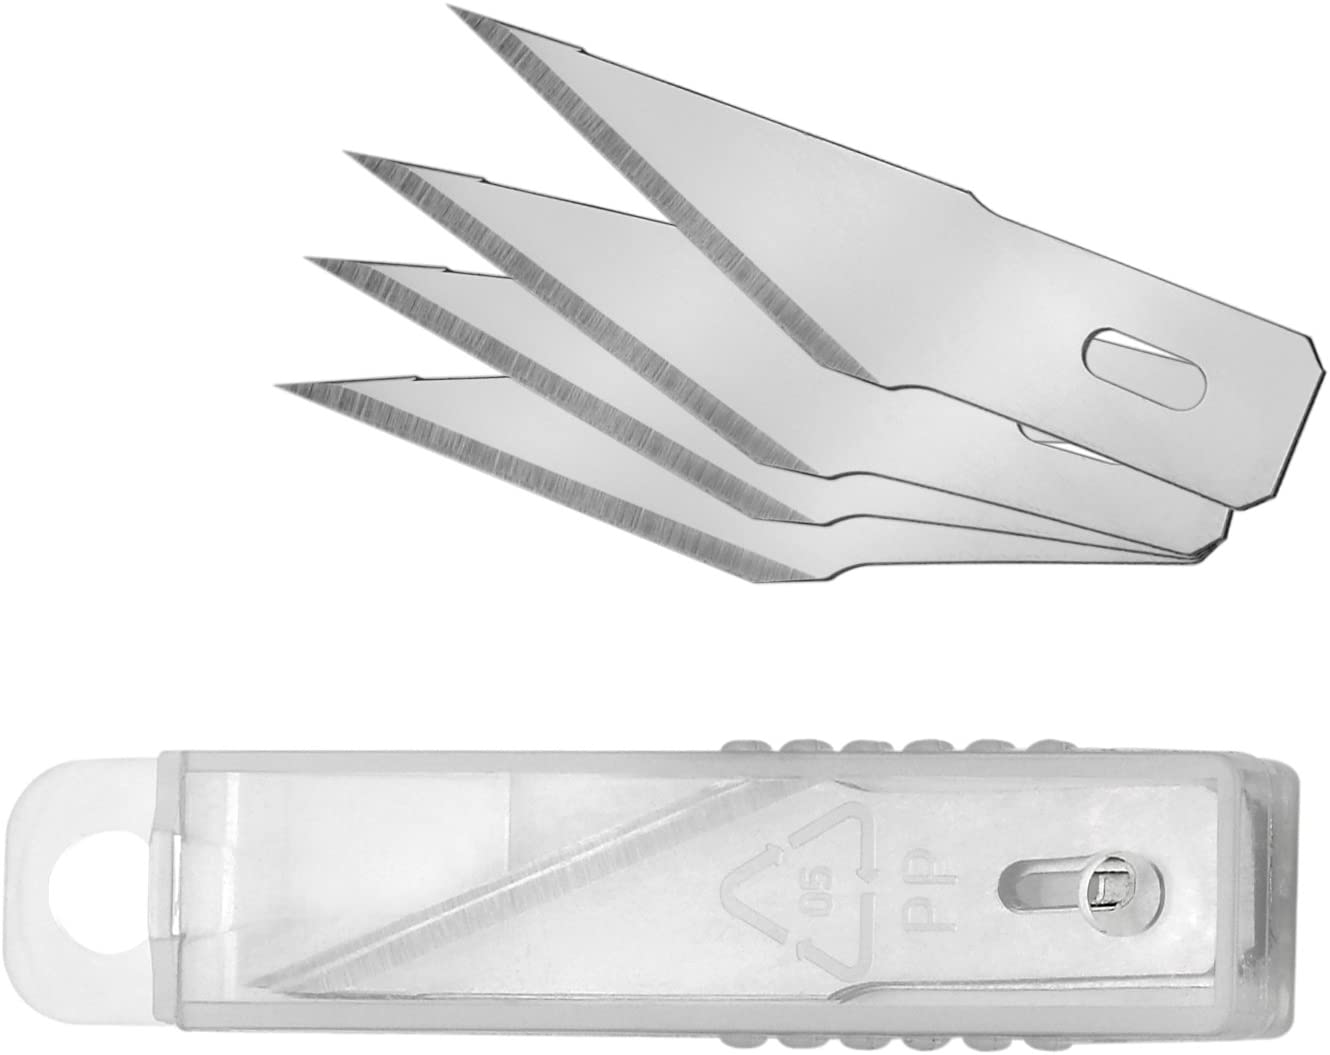 Westcott E-30404 00 Titanium Scalpel Replacement Blades (Pack of 5)